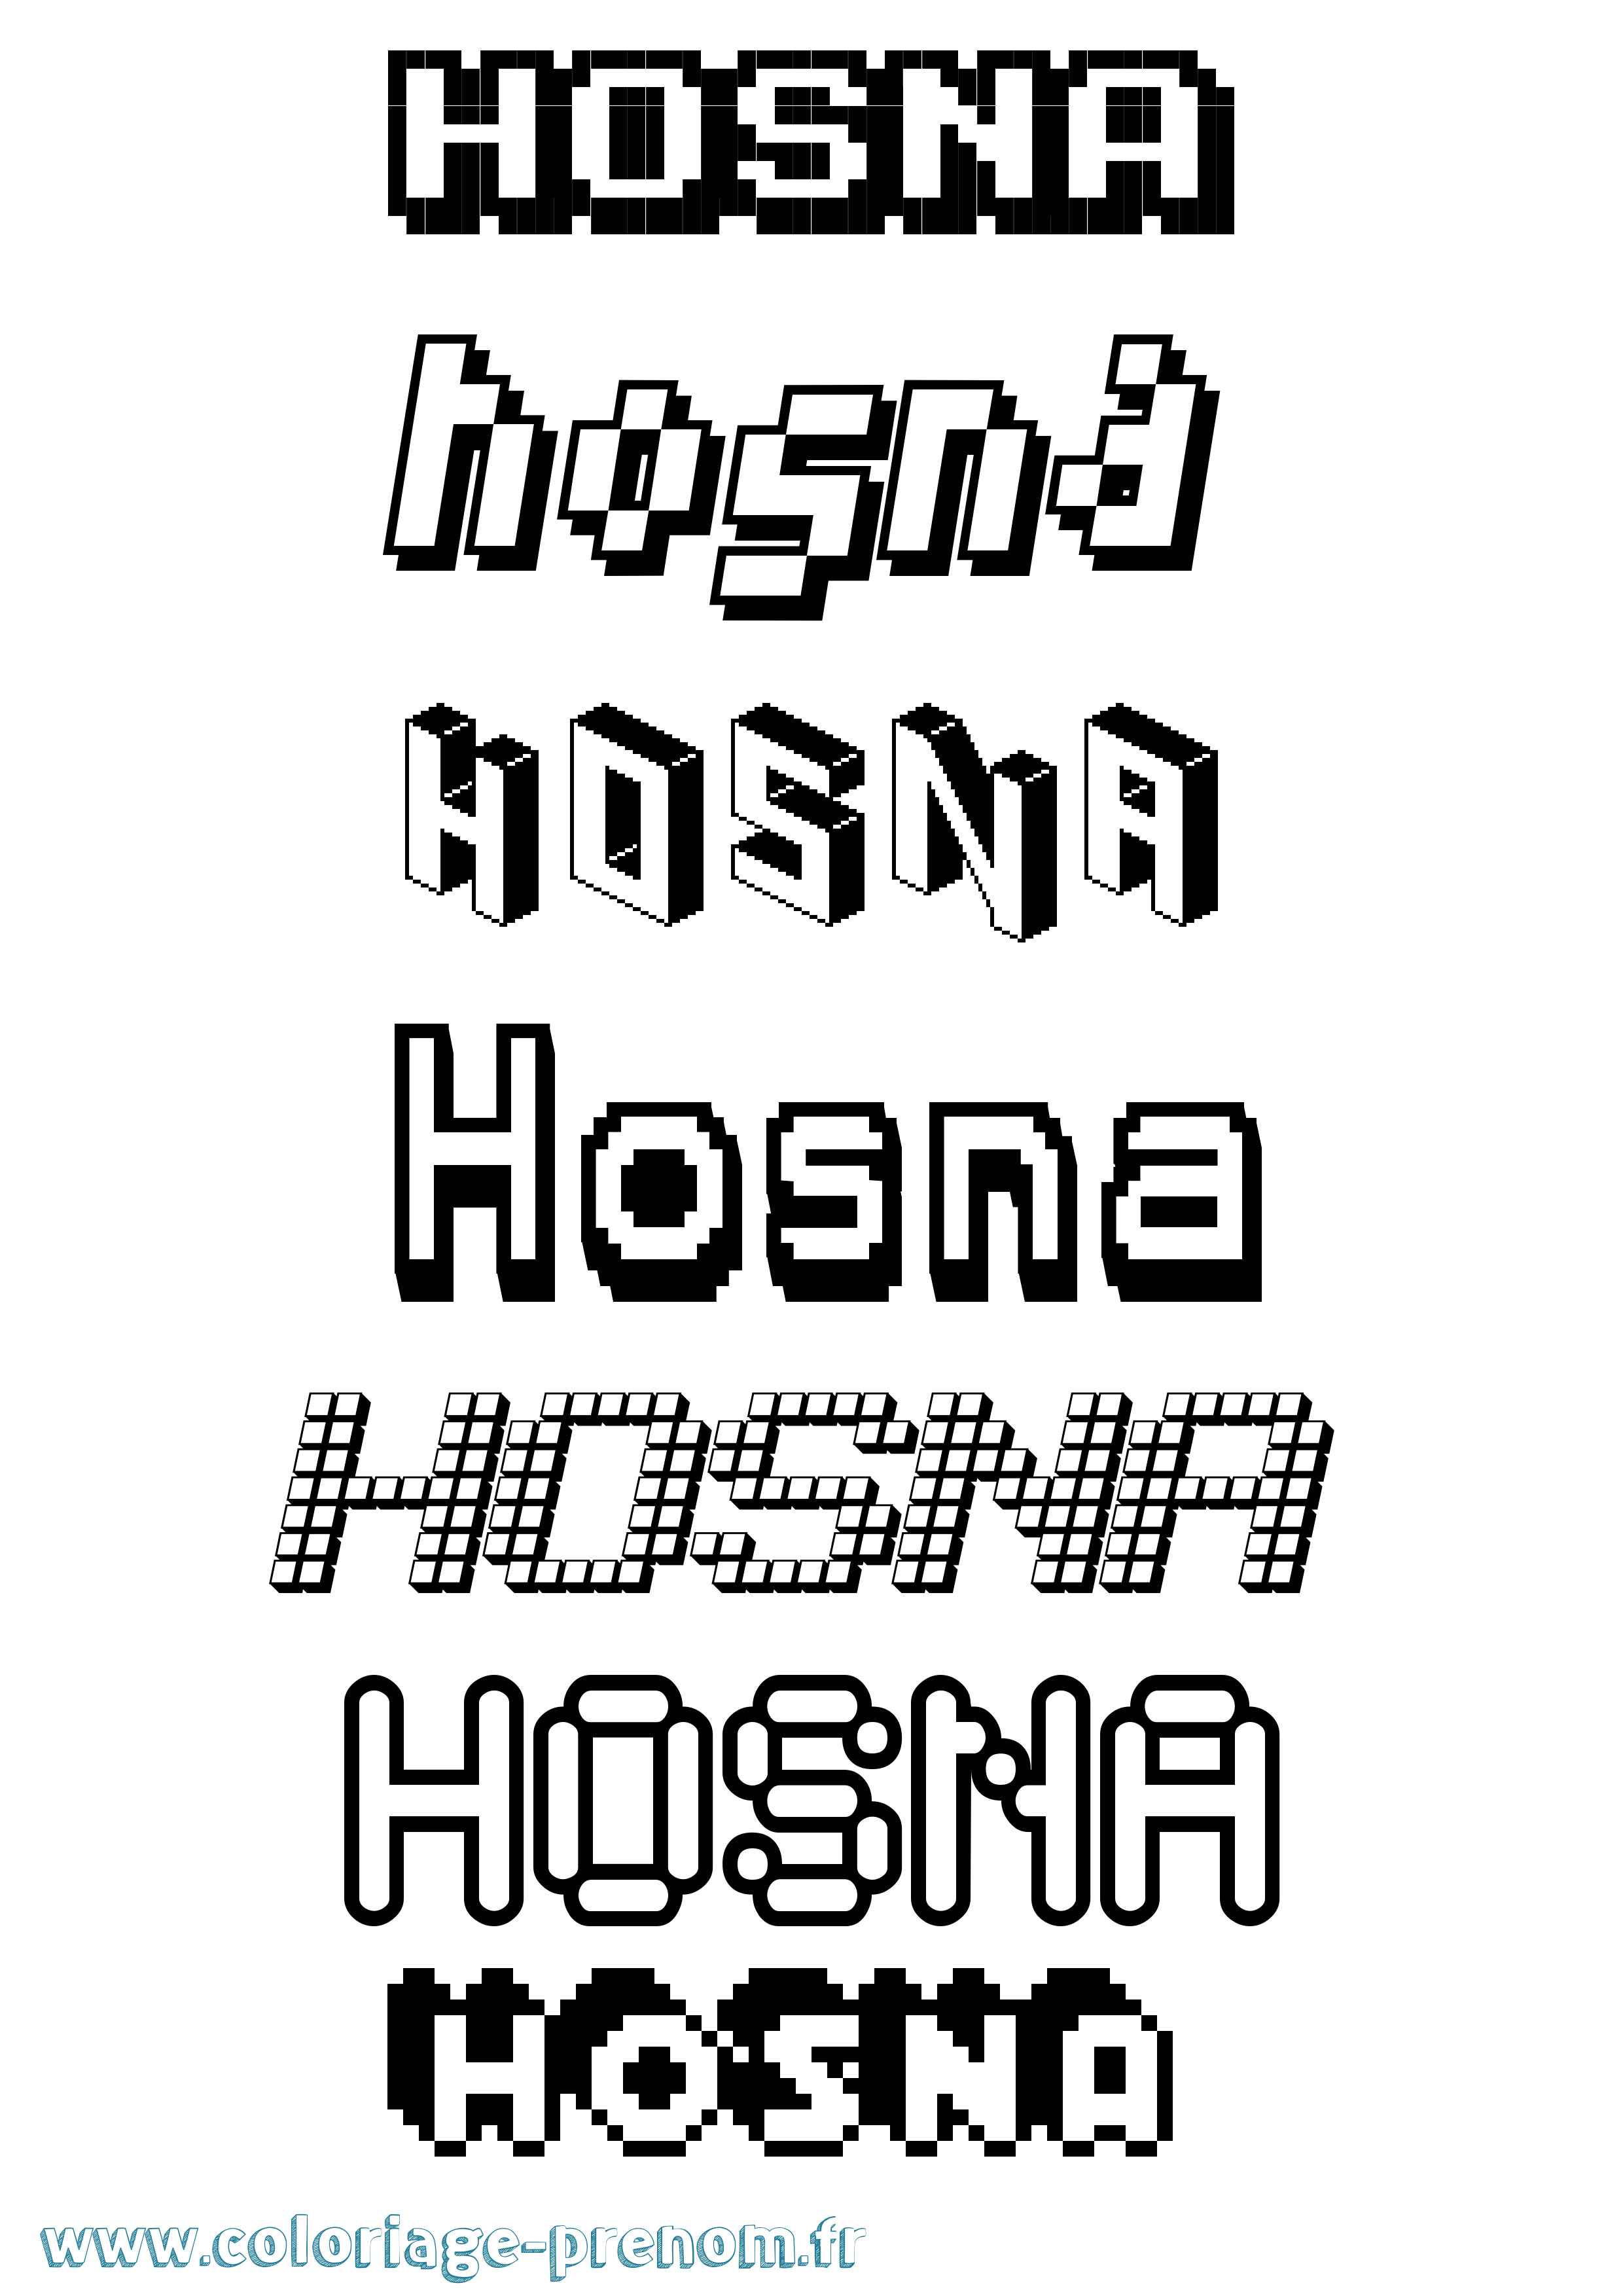 Coloriage prénom Hosna Pixel